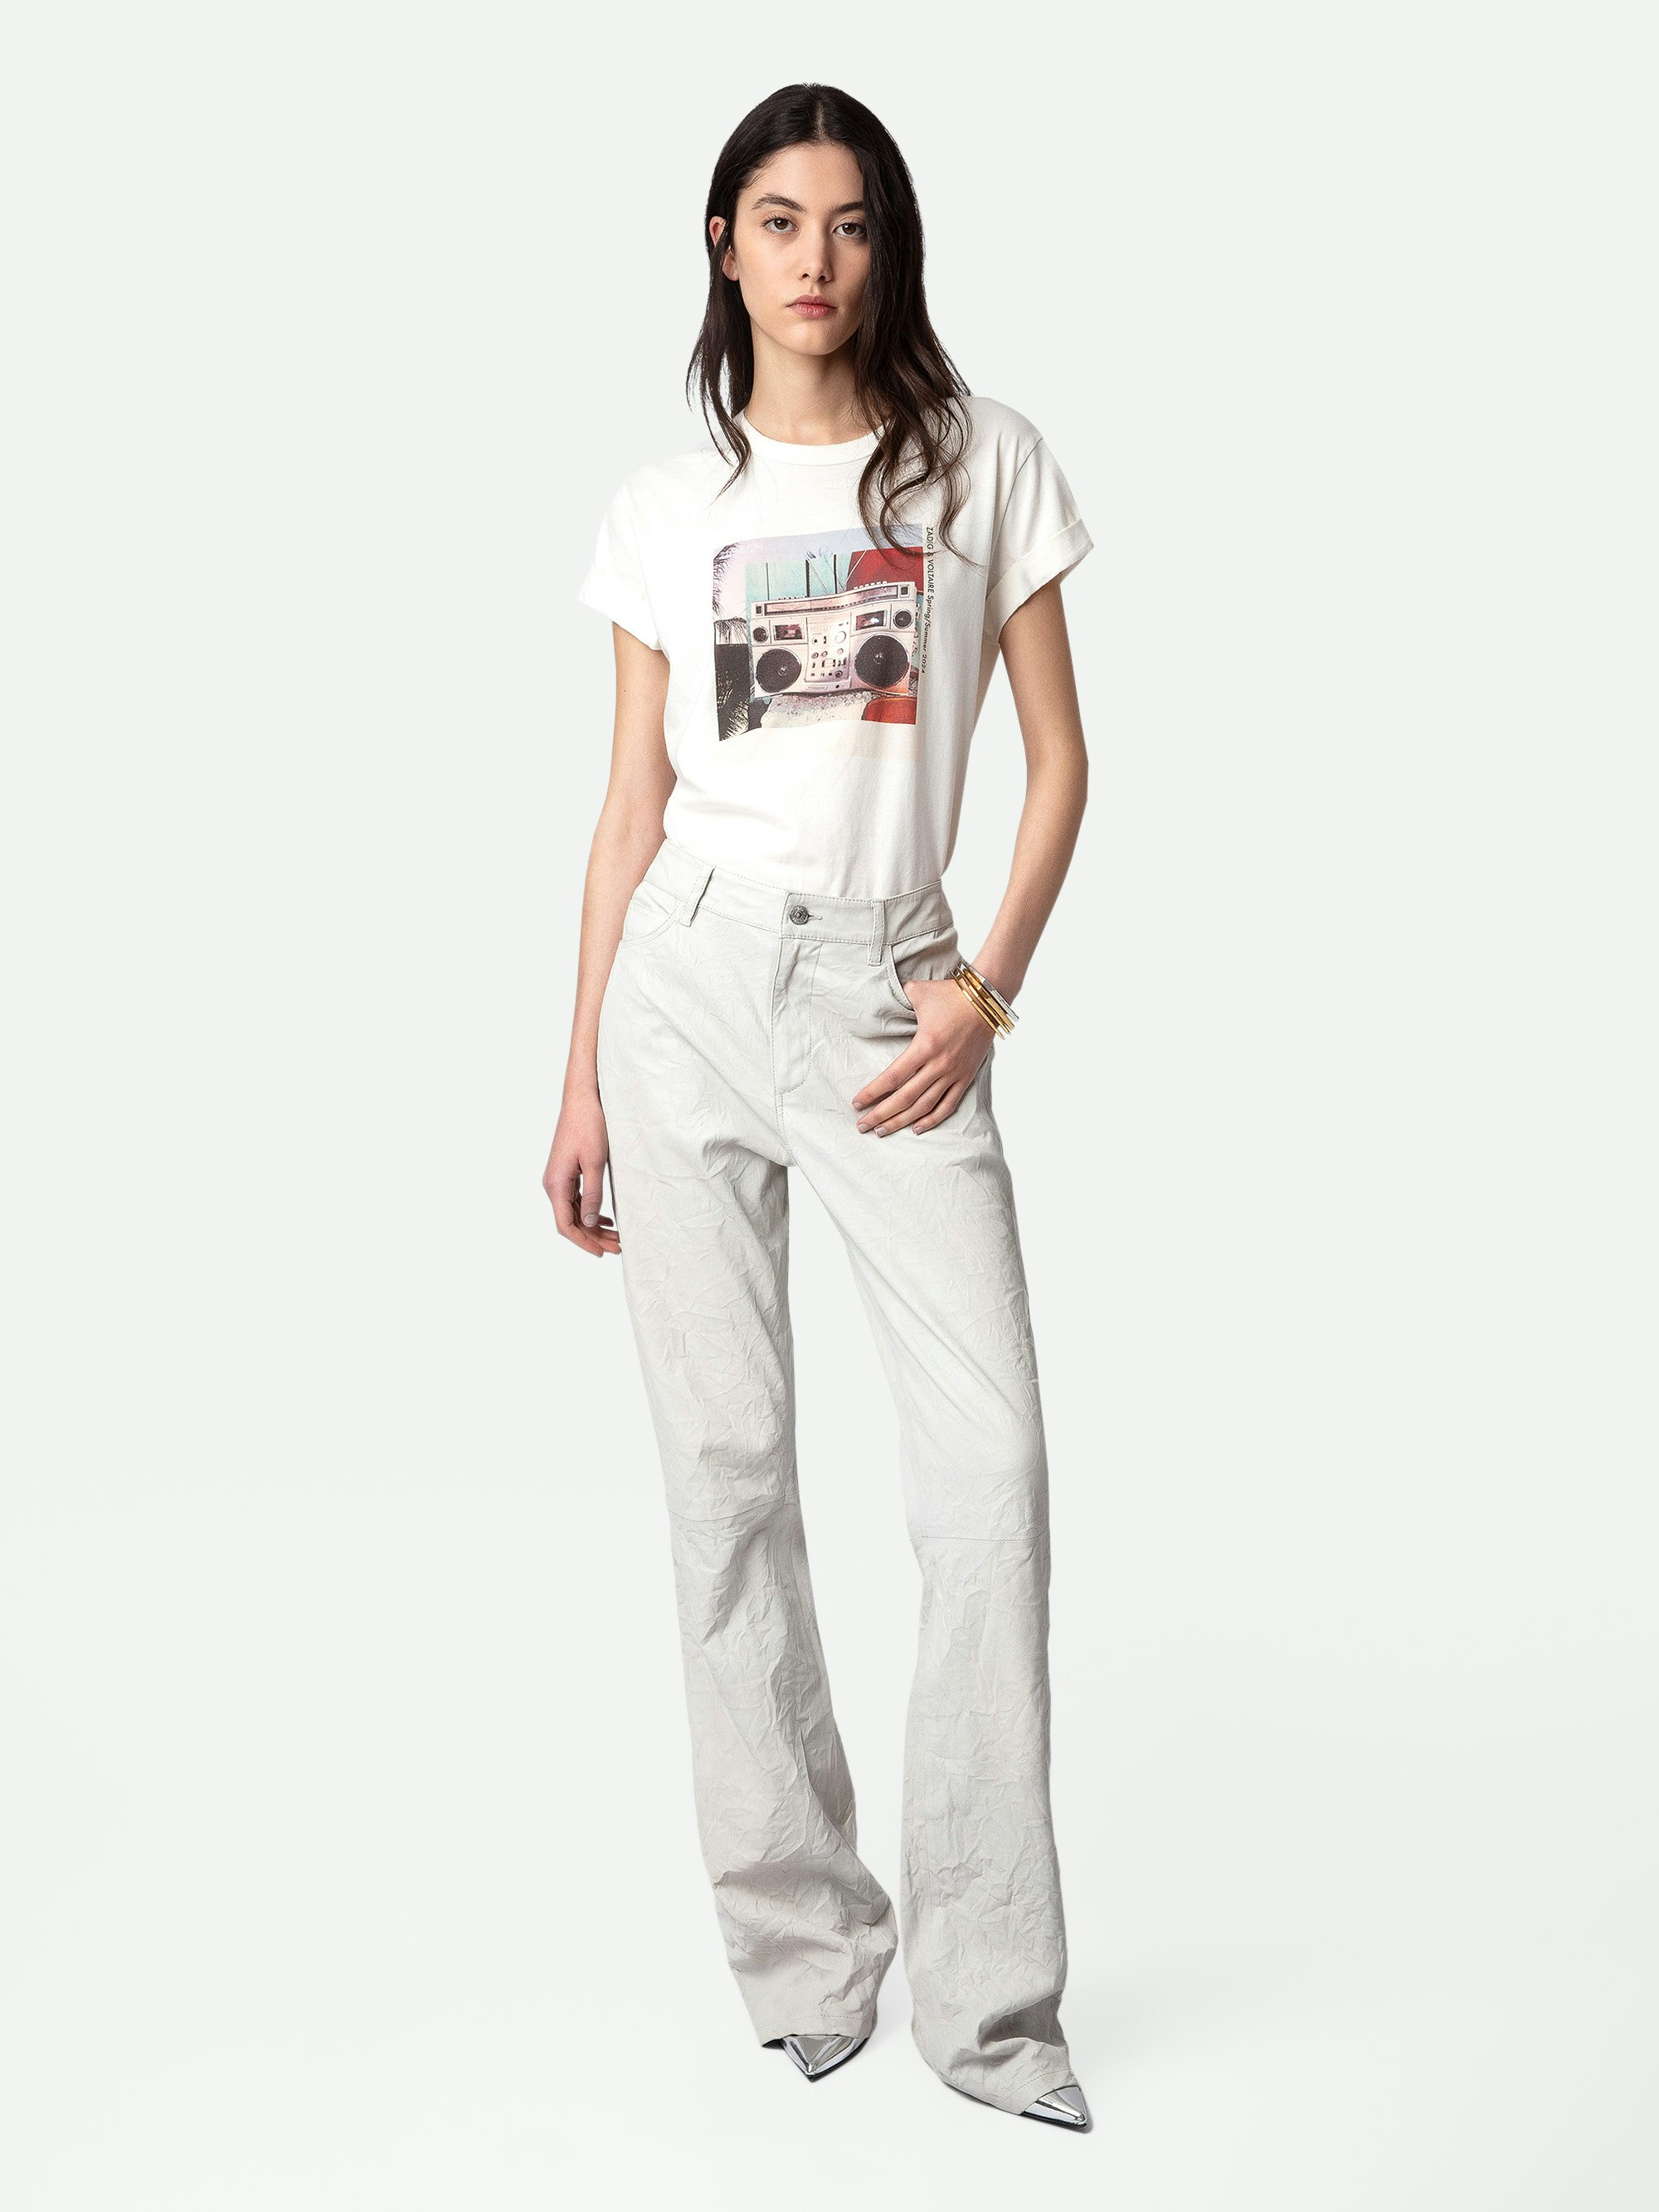 T-shirt Anya Photoprint - T-shirt en coton blanc à manches courtes et imprimé photoprint Ghetto Blaster.